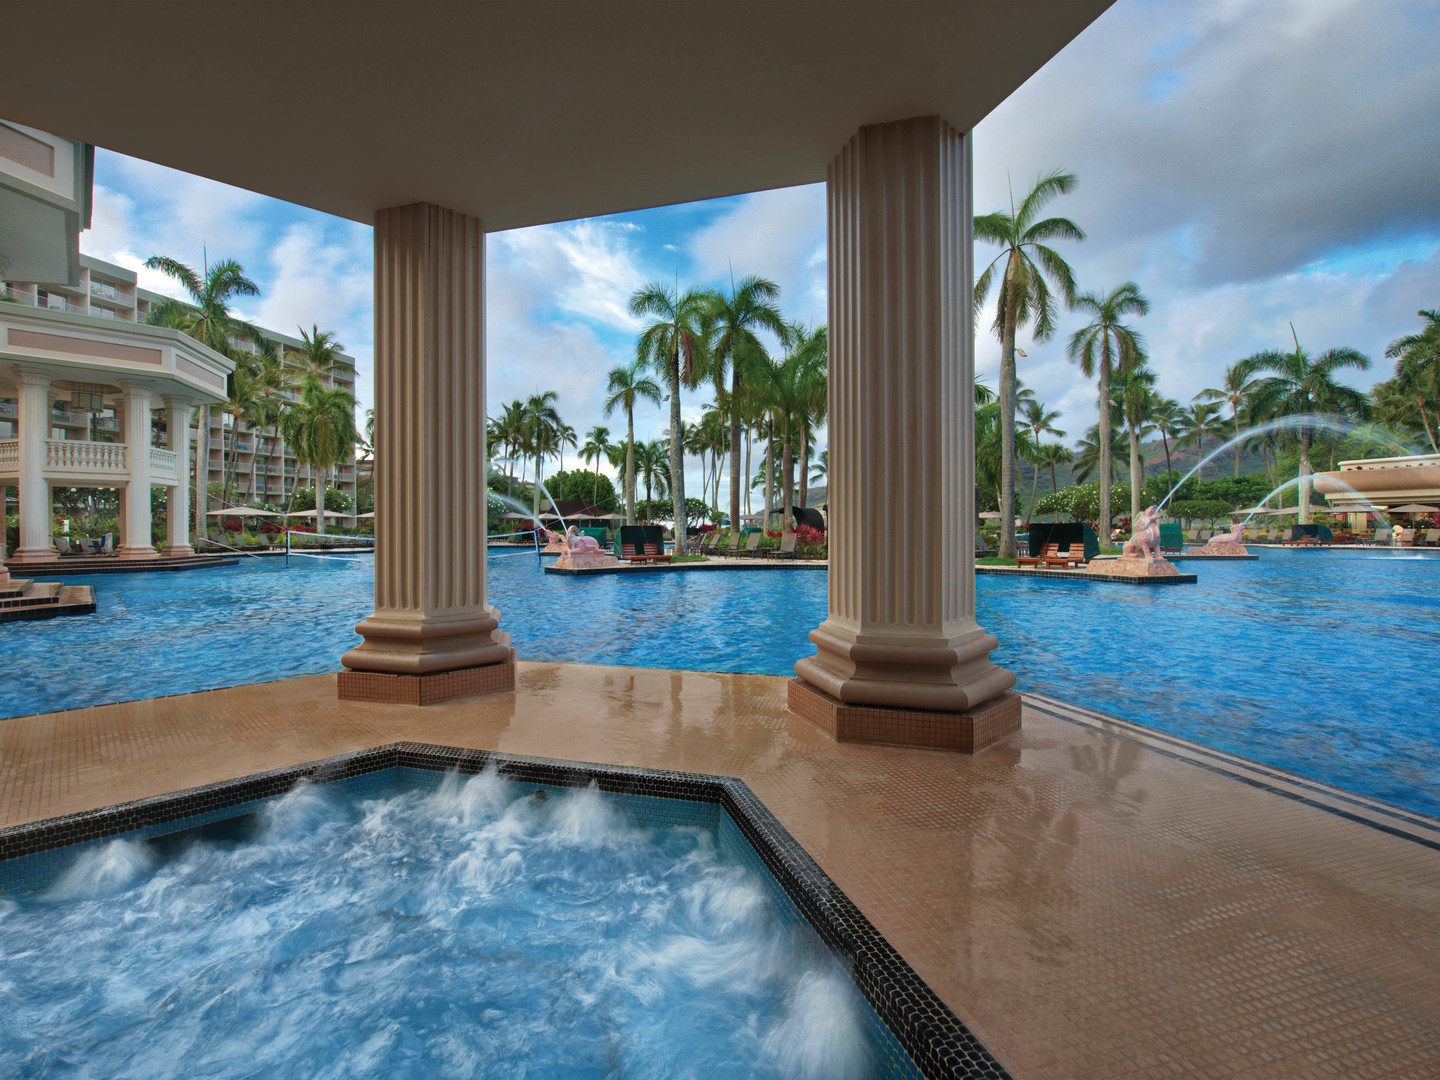 Marriott's Kaua‘i Beach Club Main Pool/Whirlpool Spa. Marriott's Kaua‘i Beach Club is located in Līhuʻe, Kaua‘i, Hawai‘i United States.